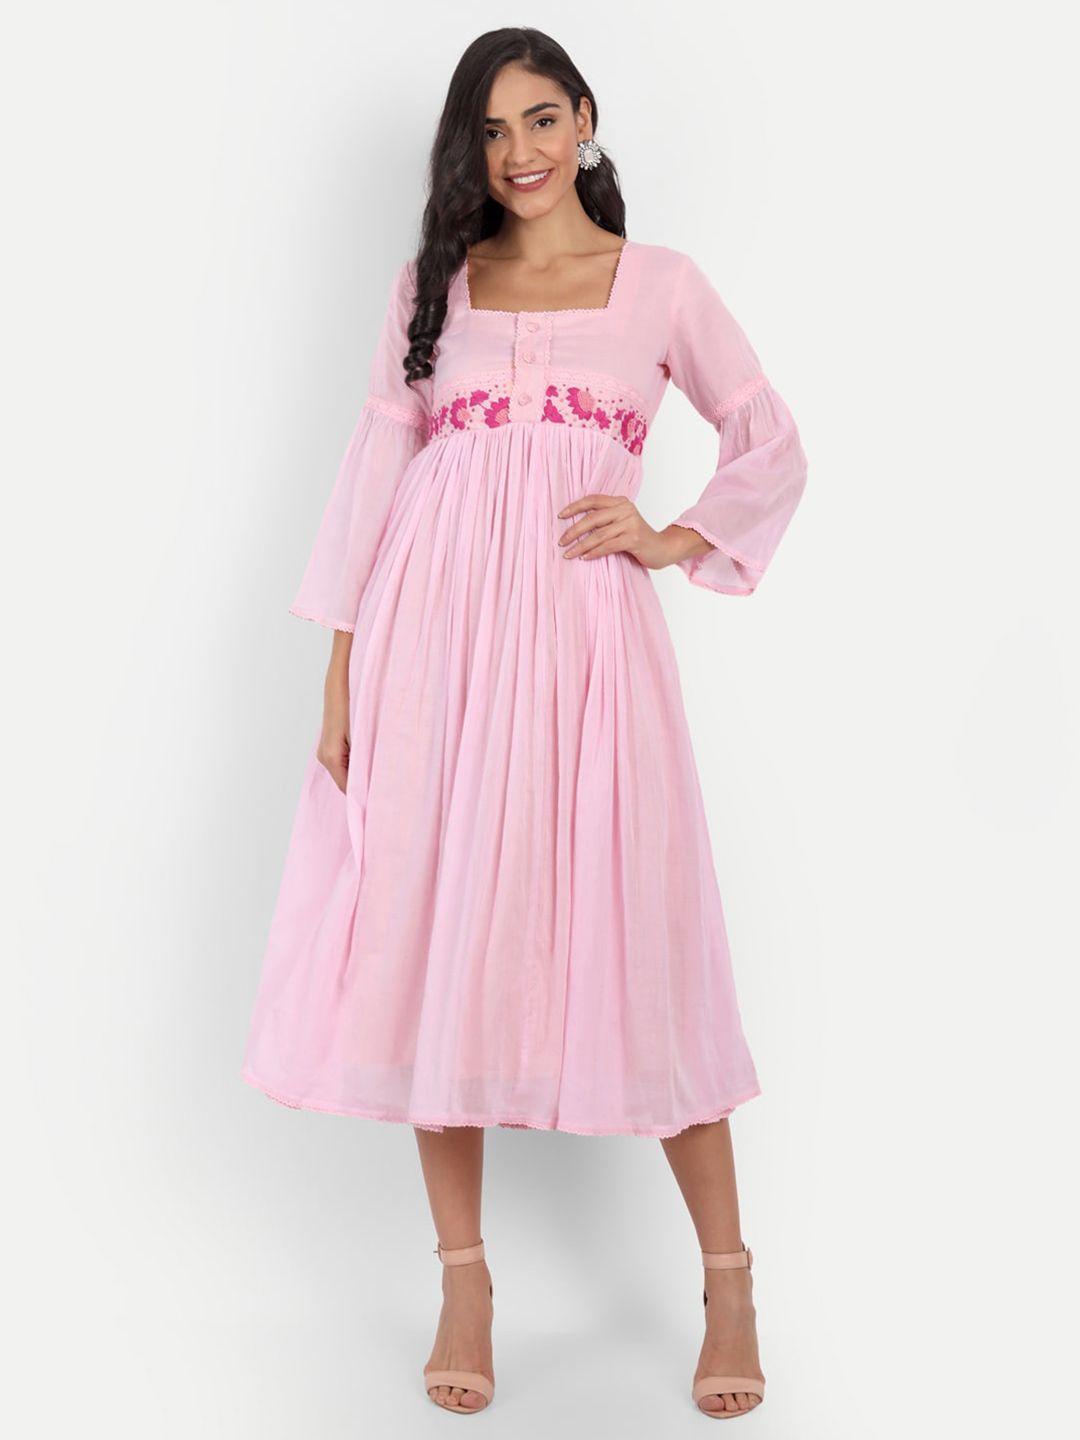 kapasriti pink empire midi dress